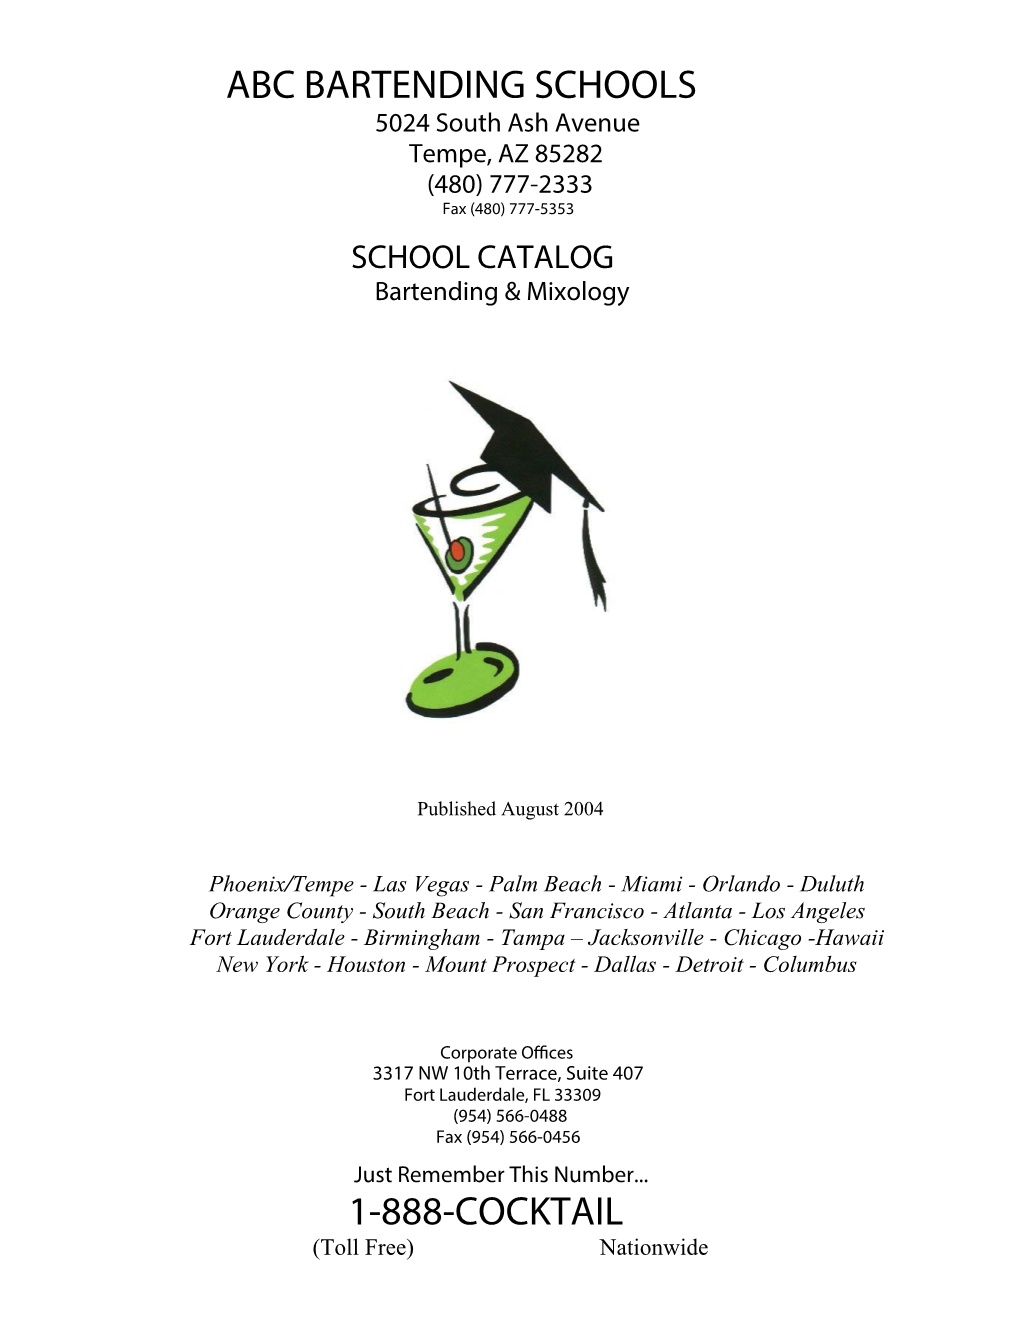 ABC Bartending Schools Catalog